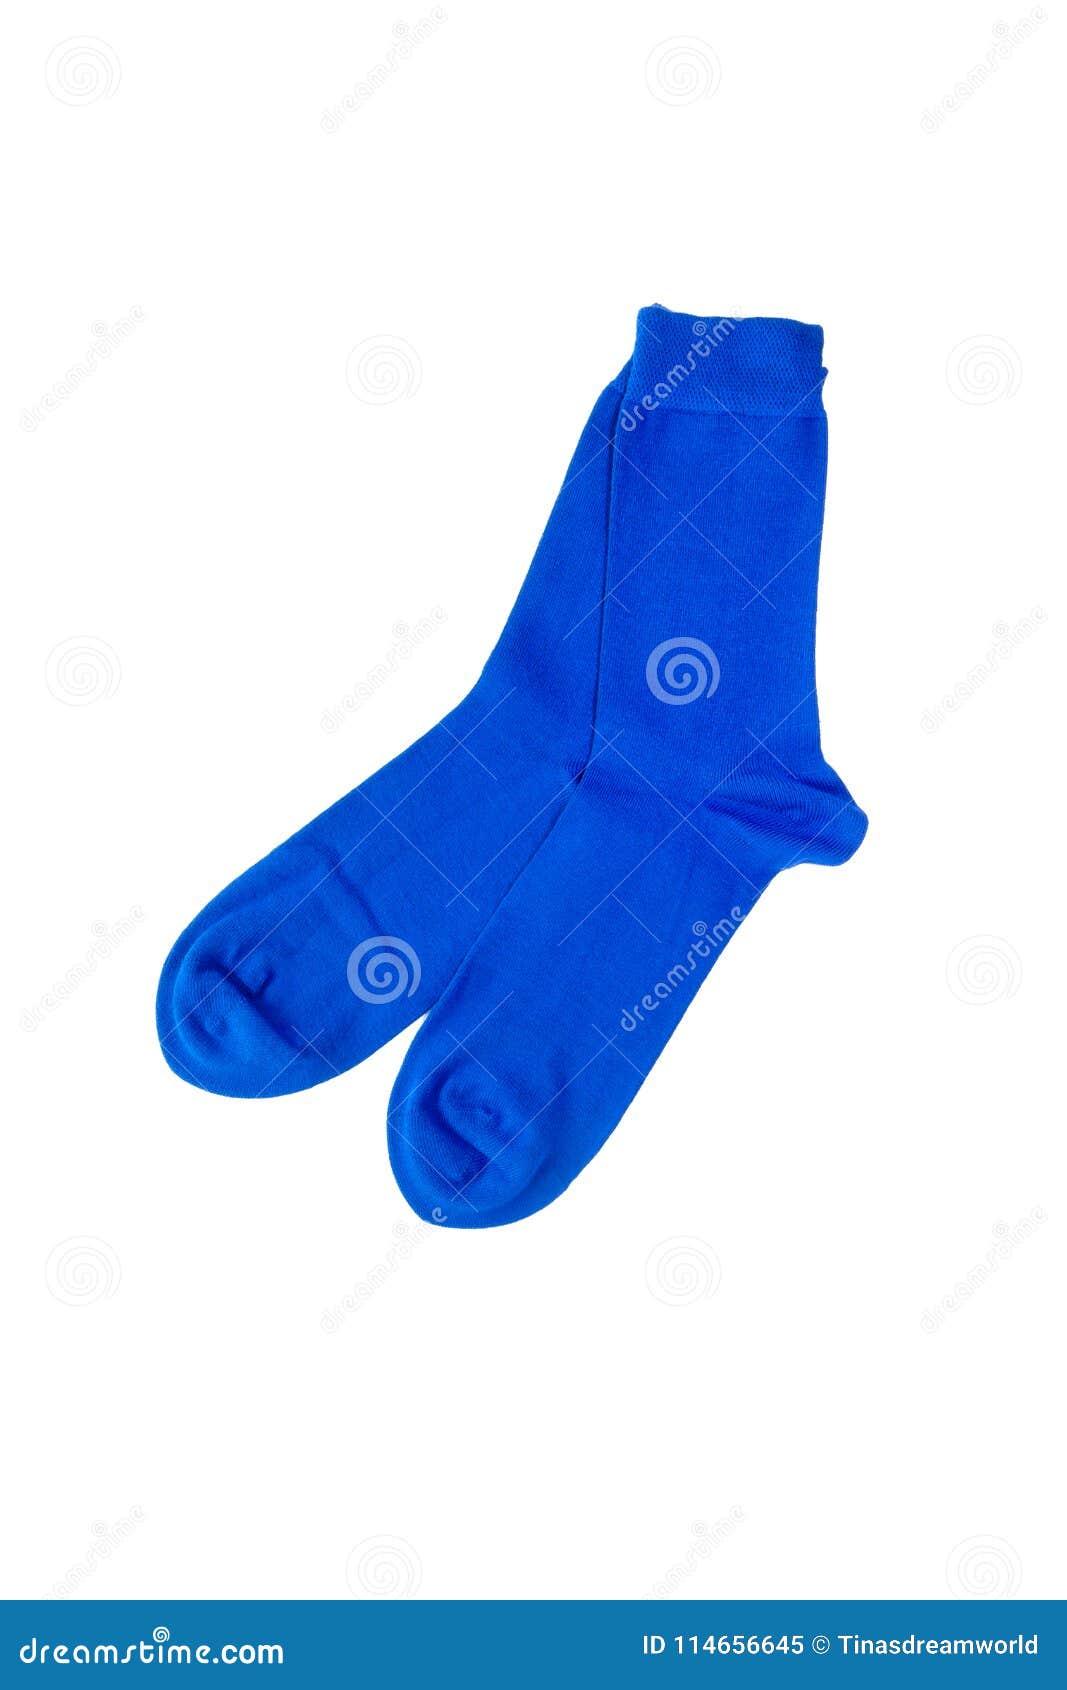 Pair of Bamboo Socks in Vibrant Blue Stock Image - Image of garment ...